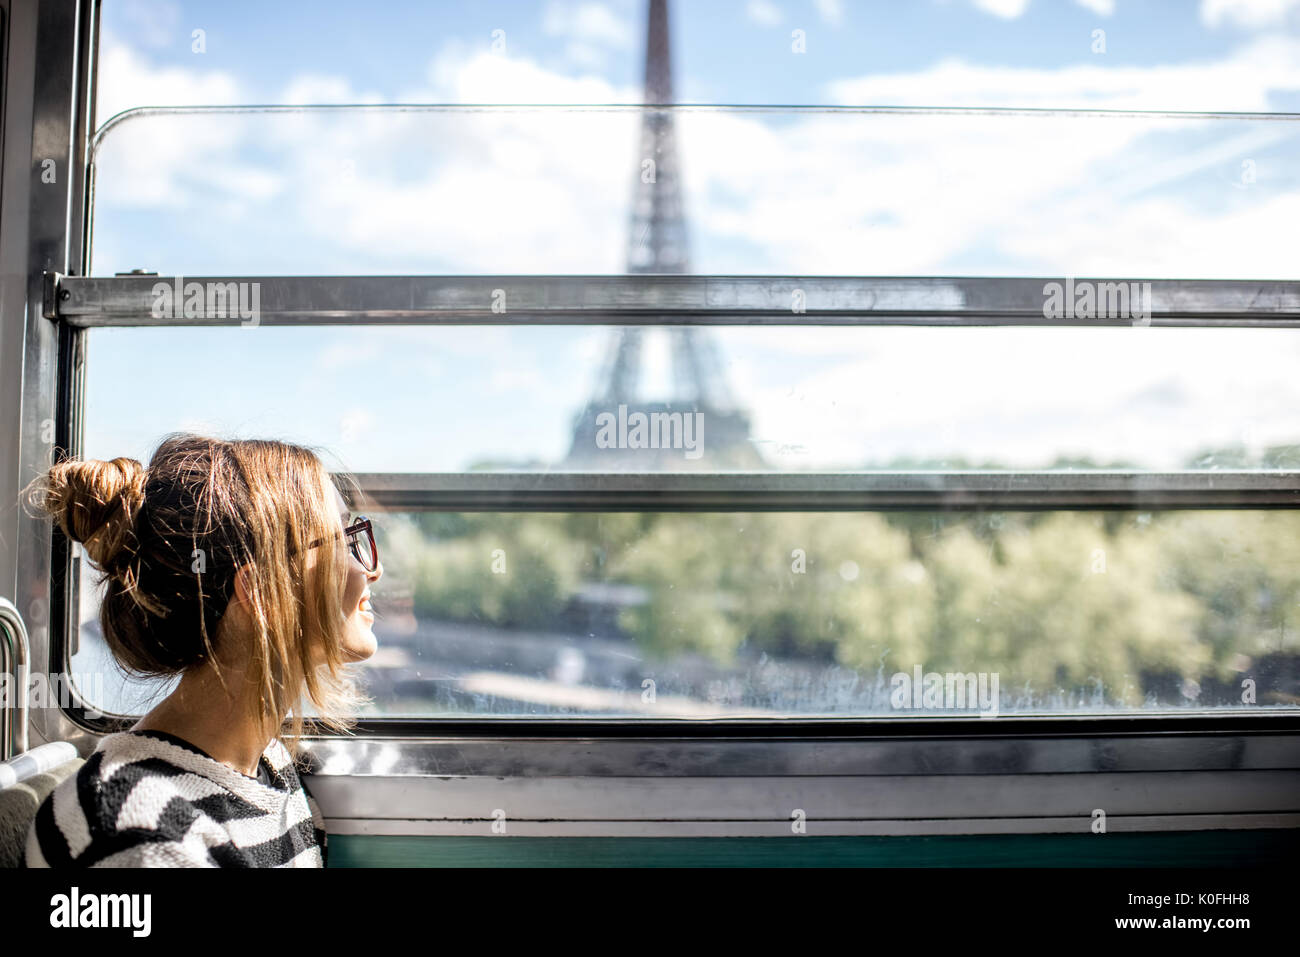 Woman in Paris subway train Stock Photo